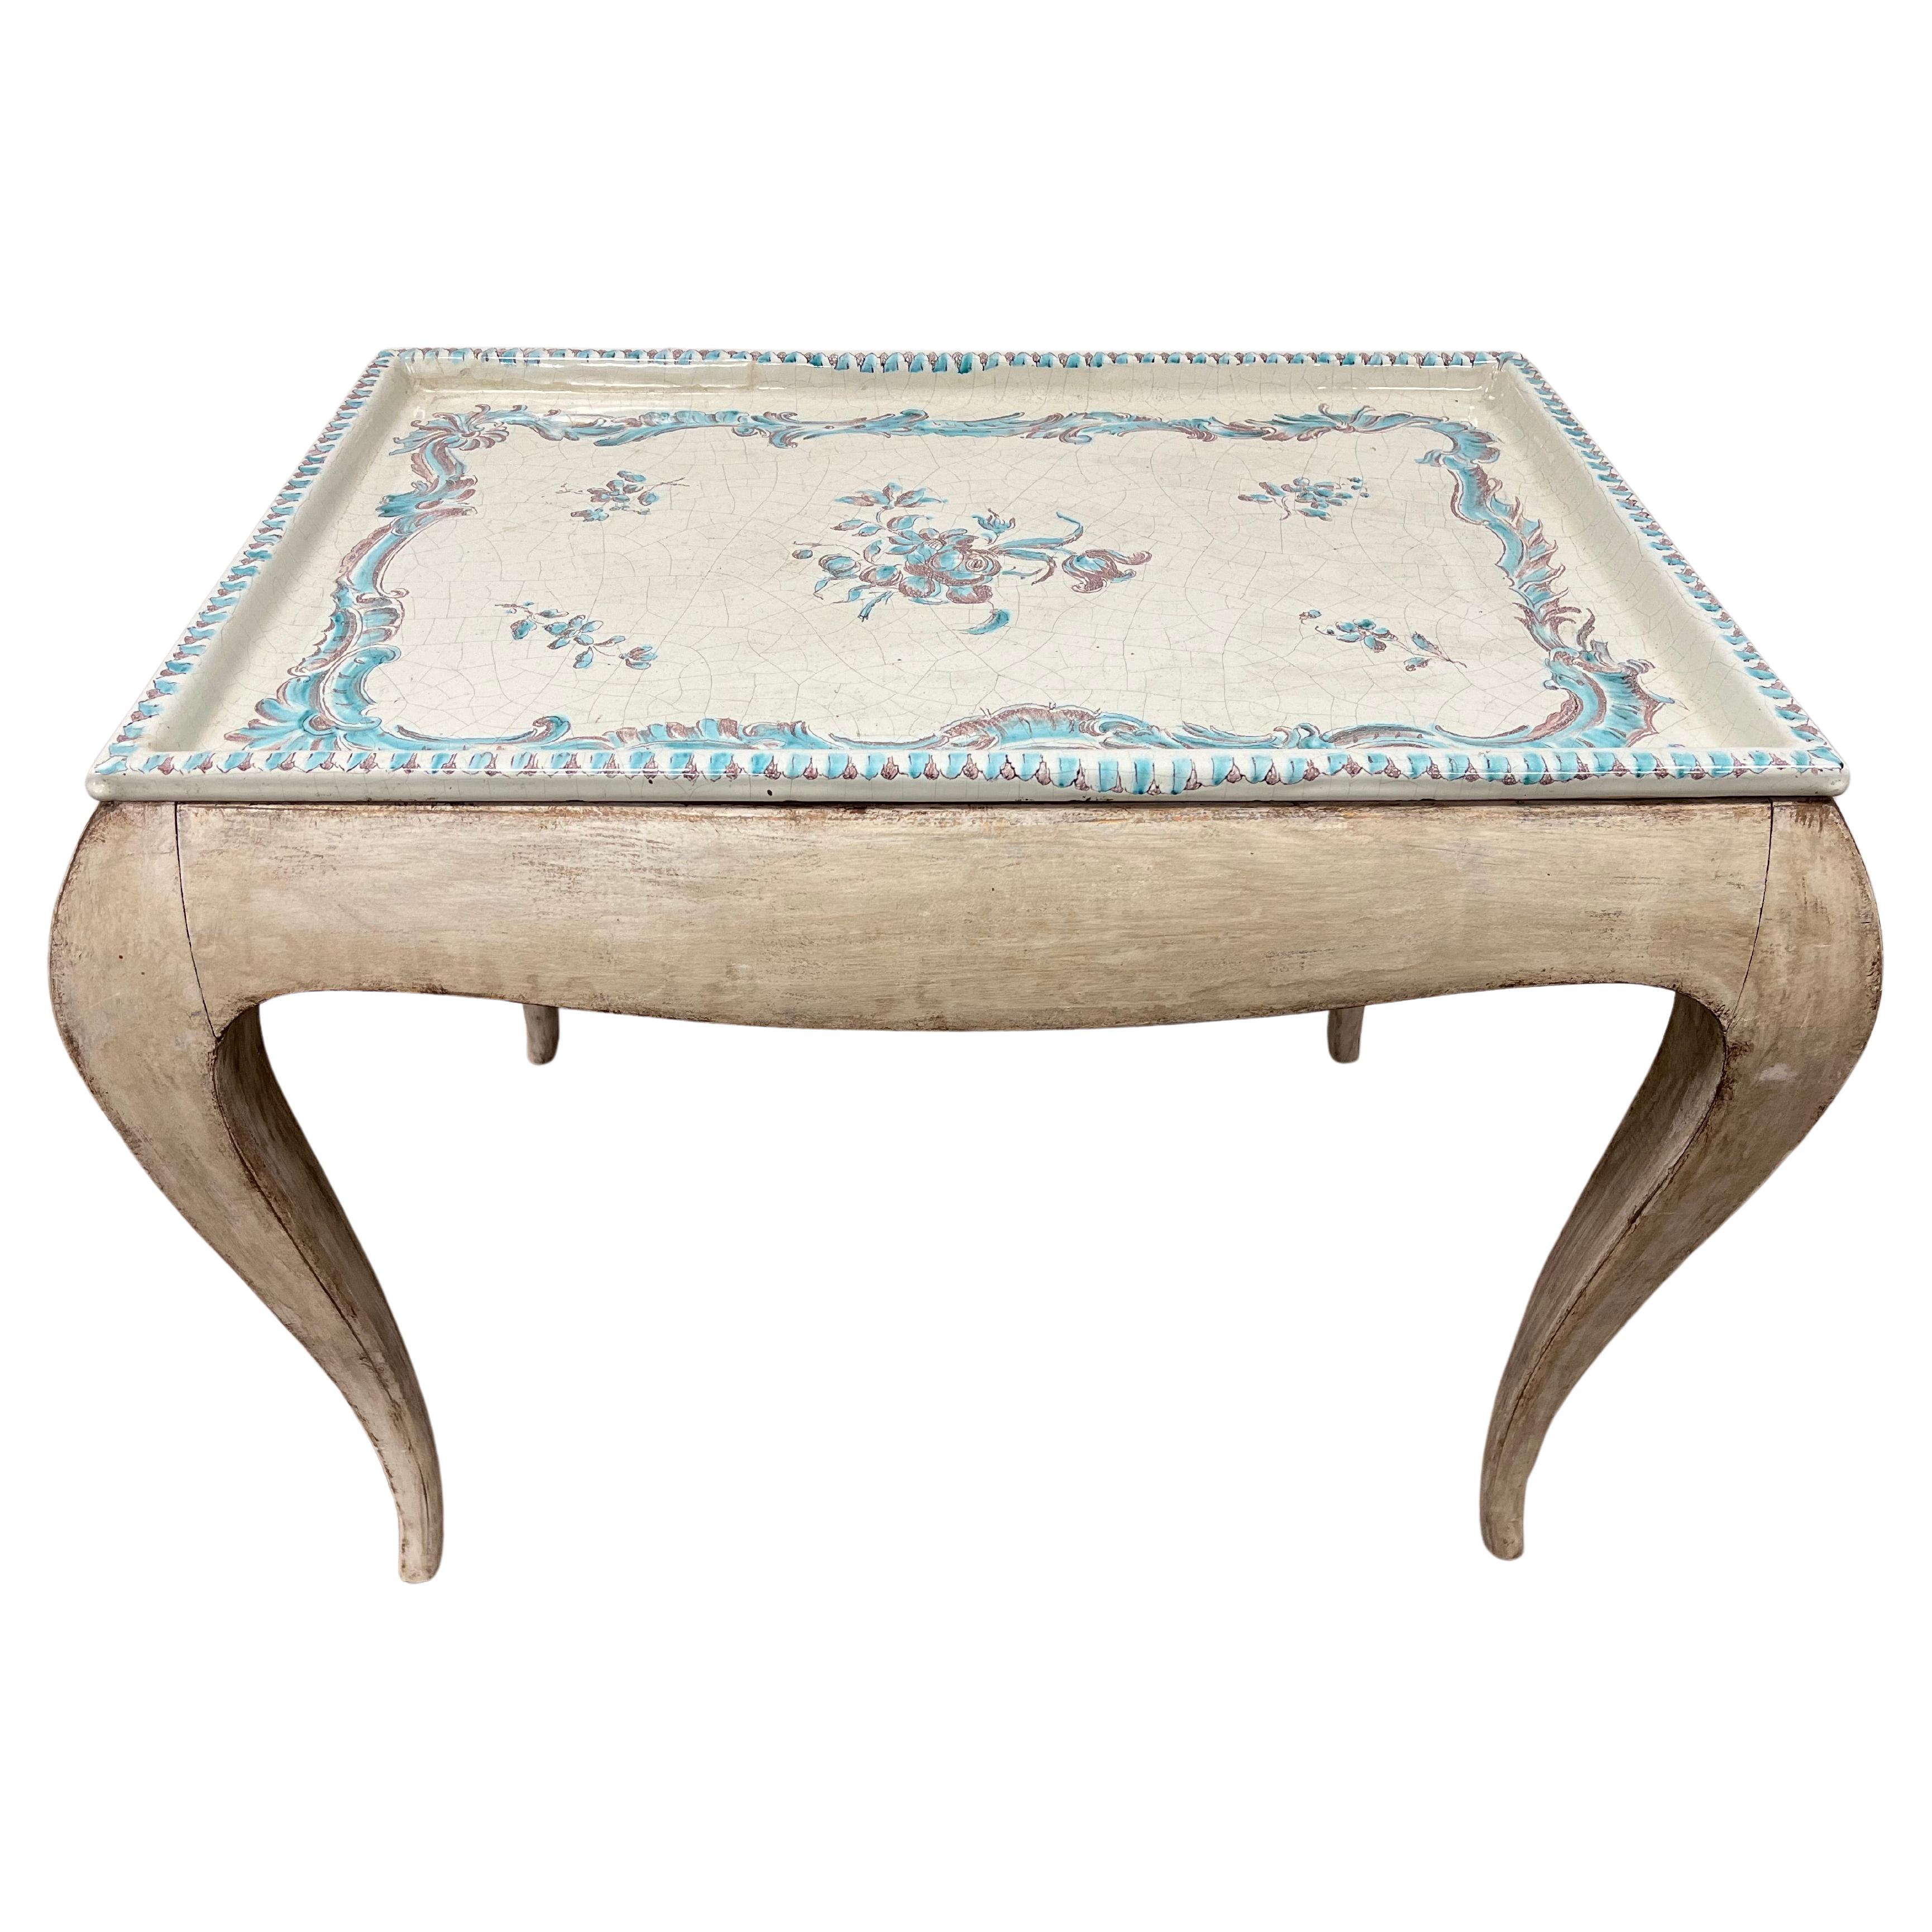 20th Century Swedish Rococo Style Tray Table